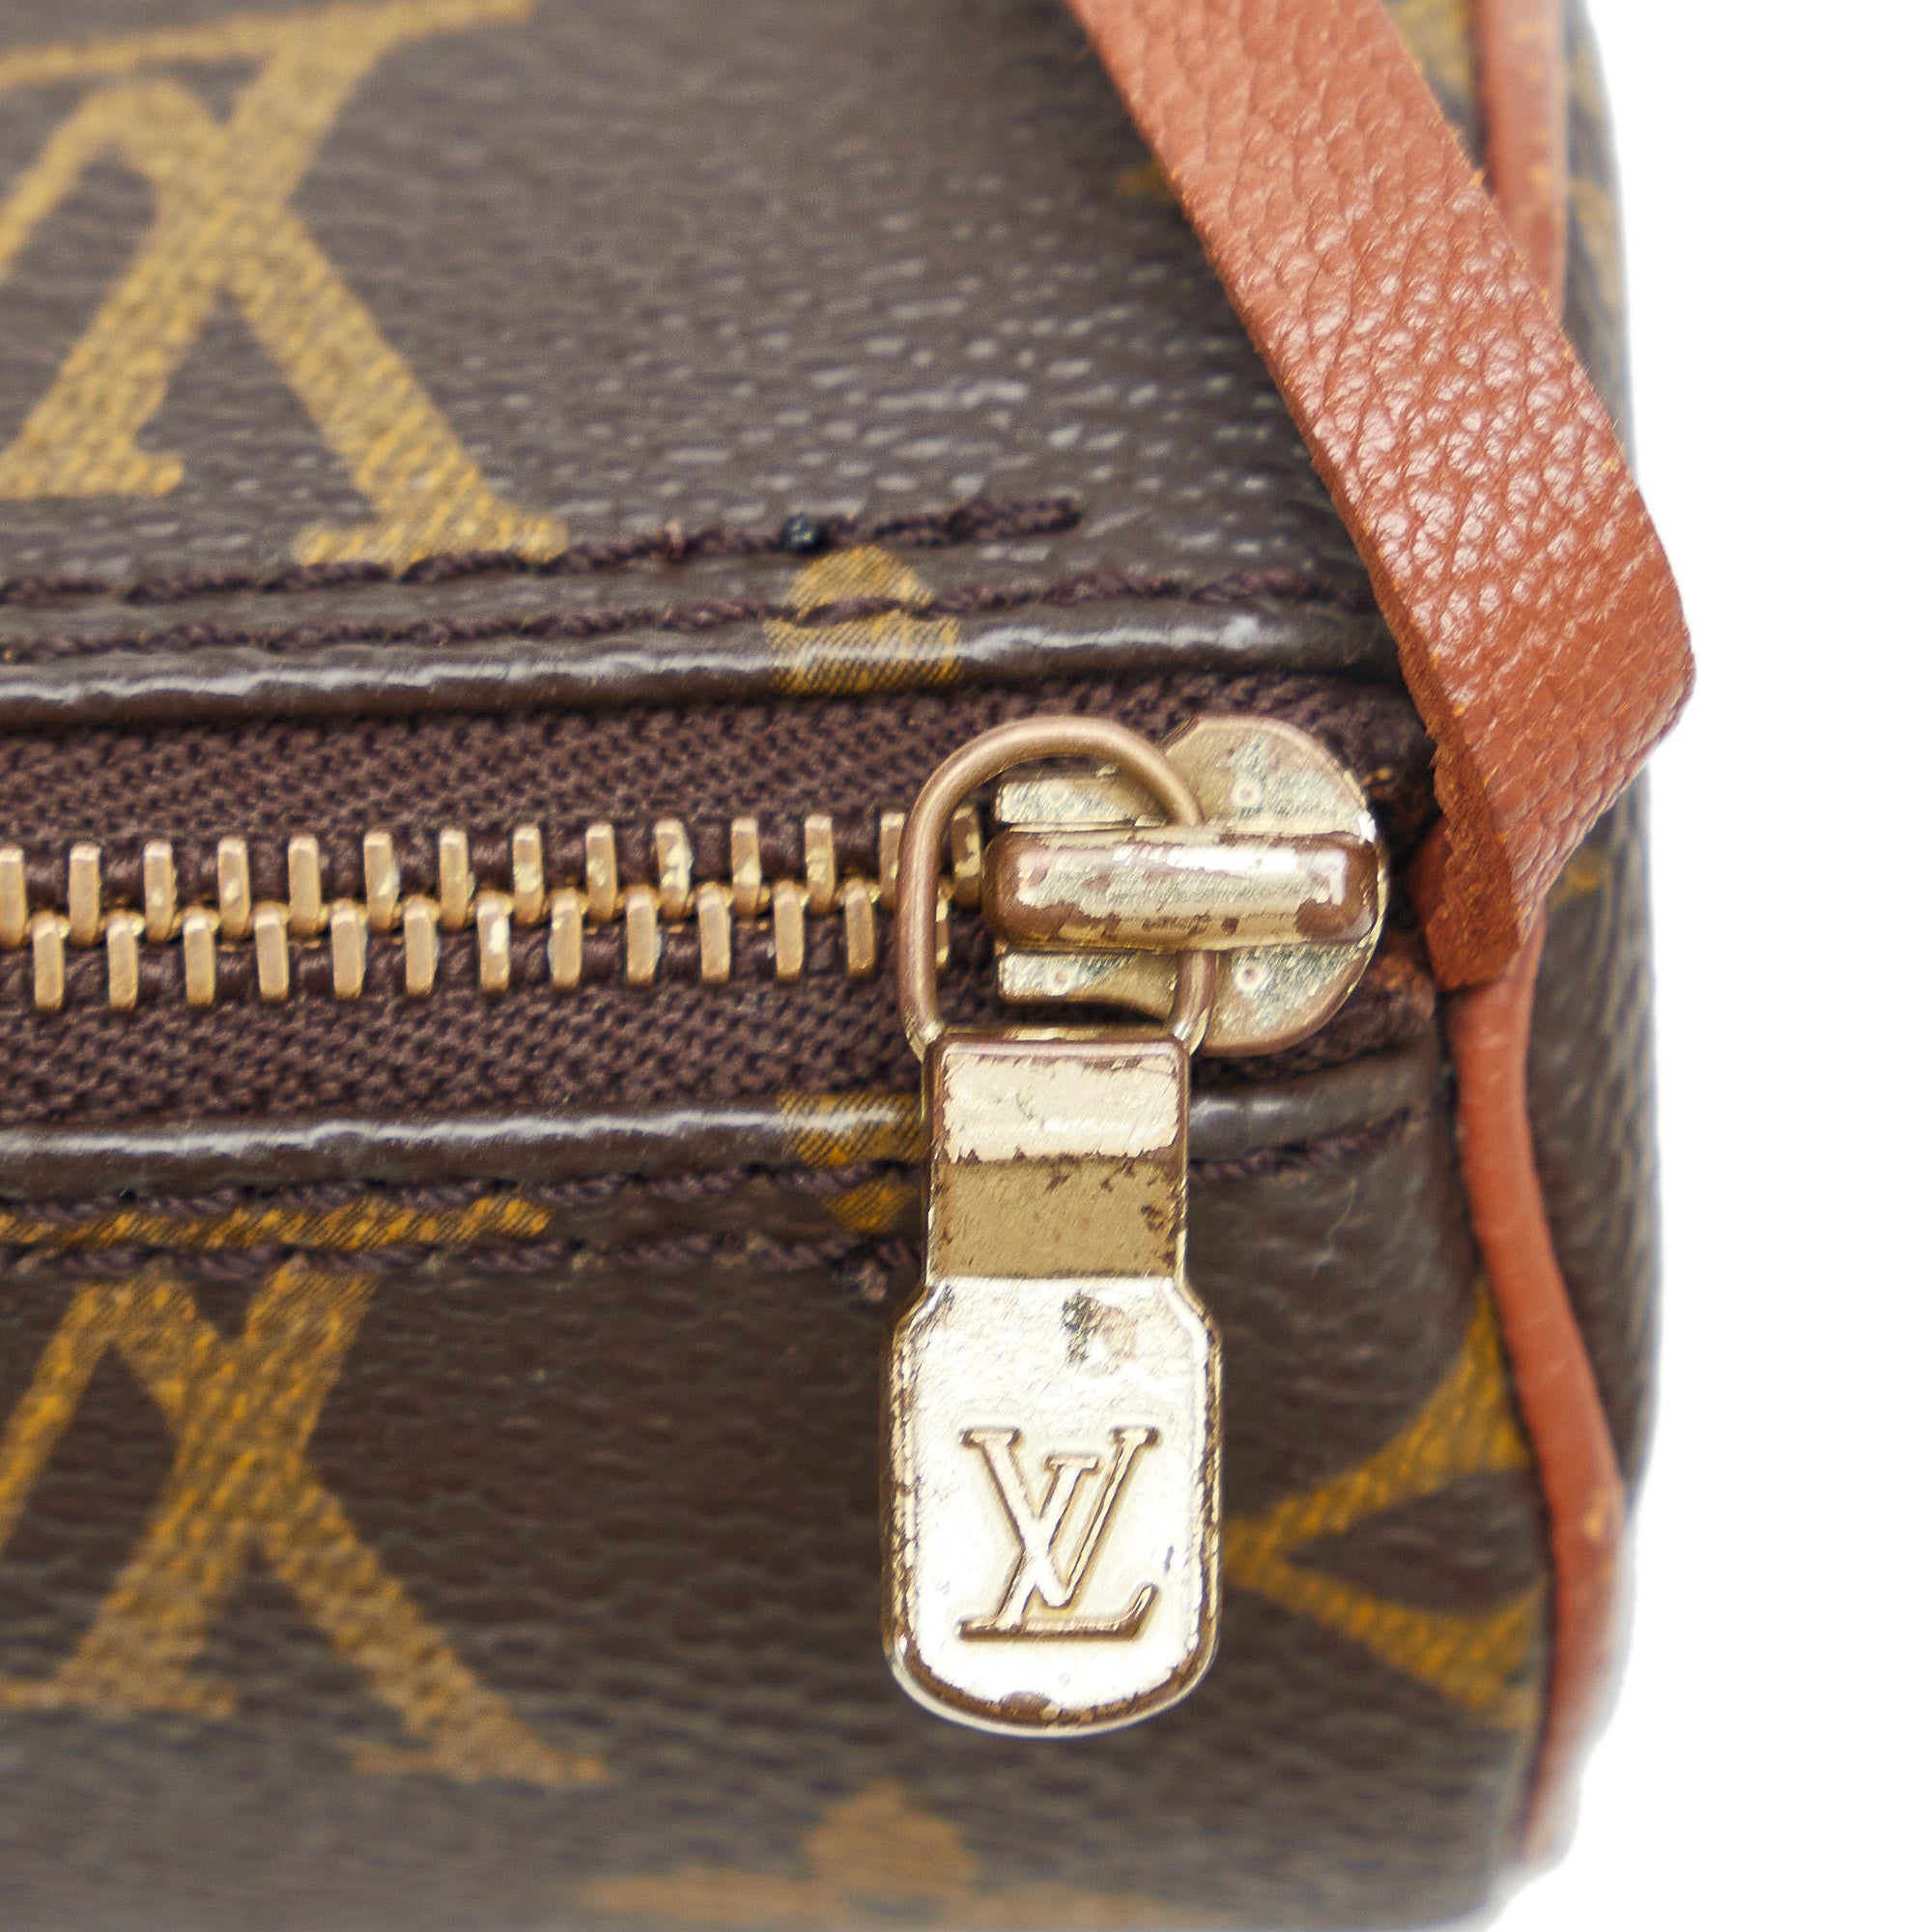 Brown Louis Vuitton Monogram Papillon 26 Handbag, RvceShops Revival